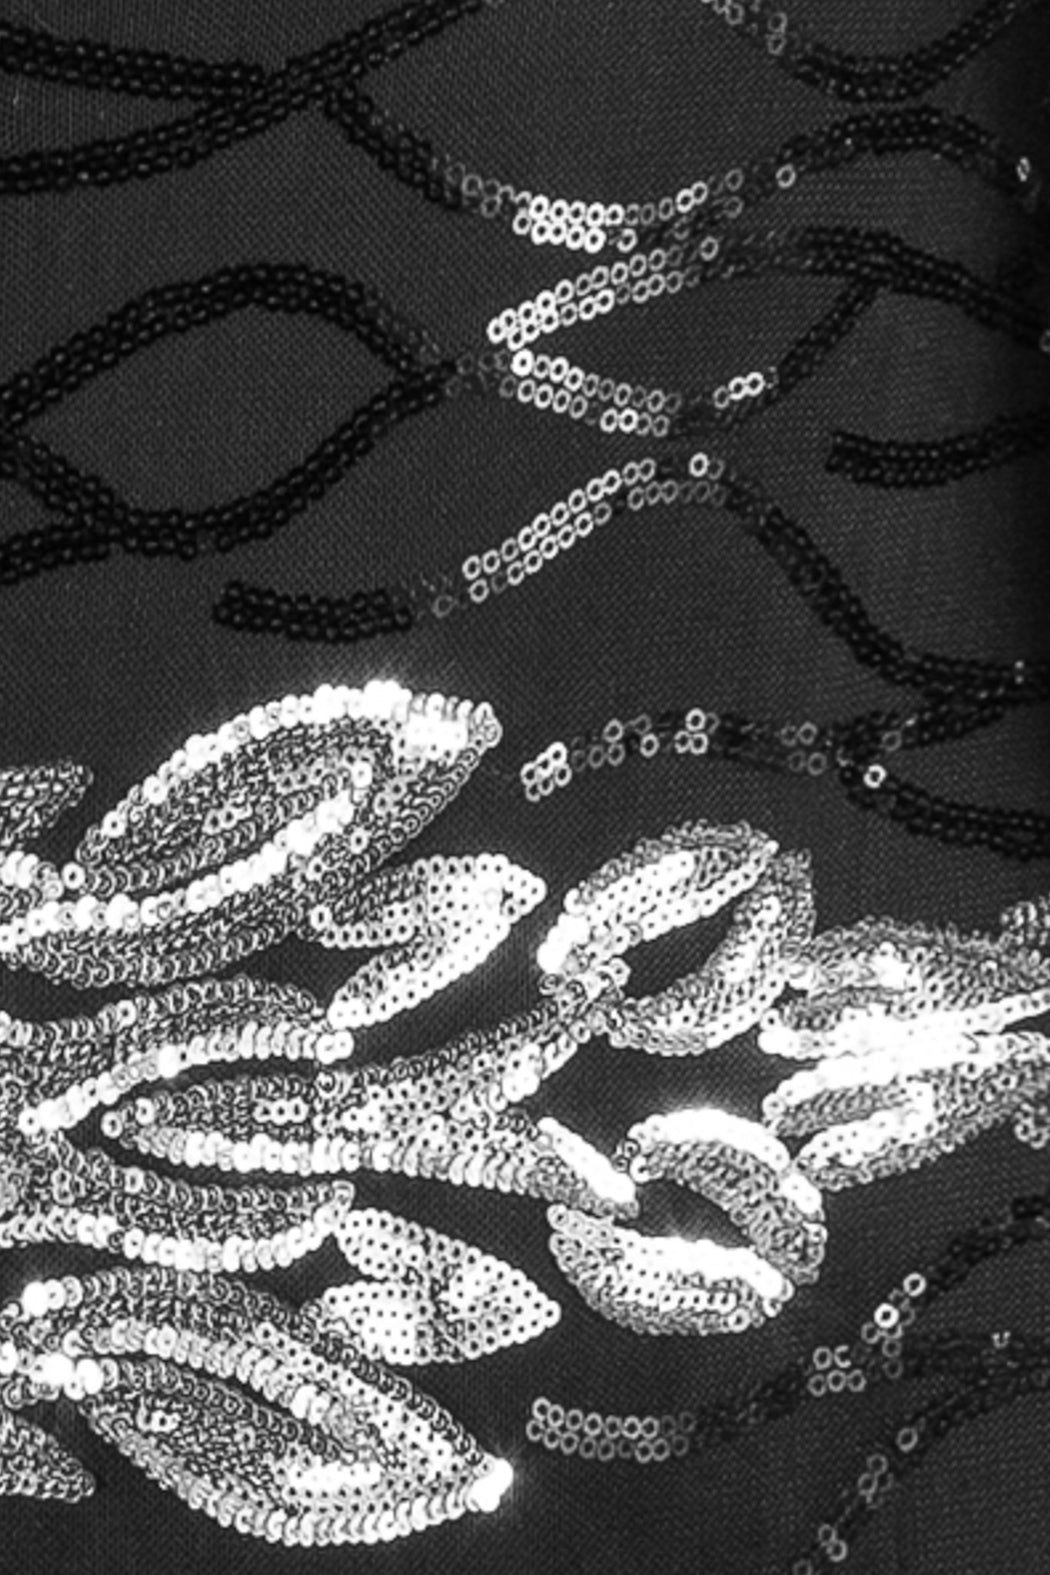 Envelope1976 Famous dress - Leftover fabric Dress Black / Silver